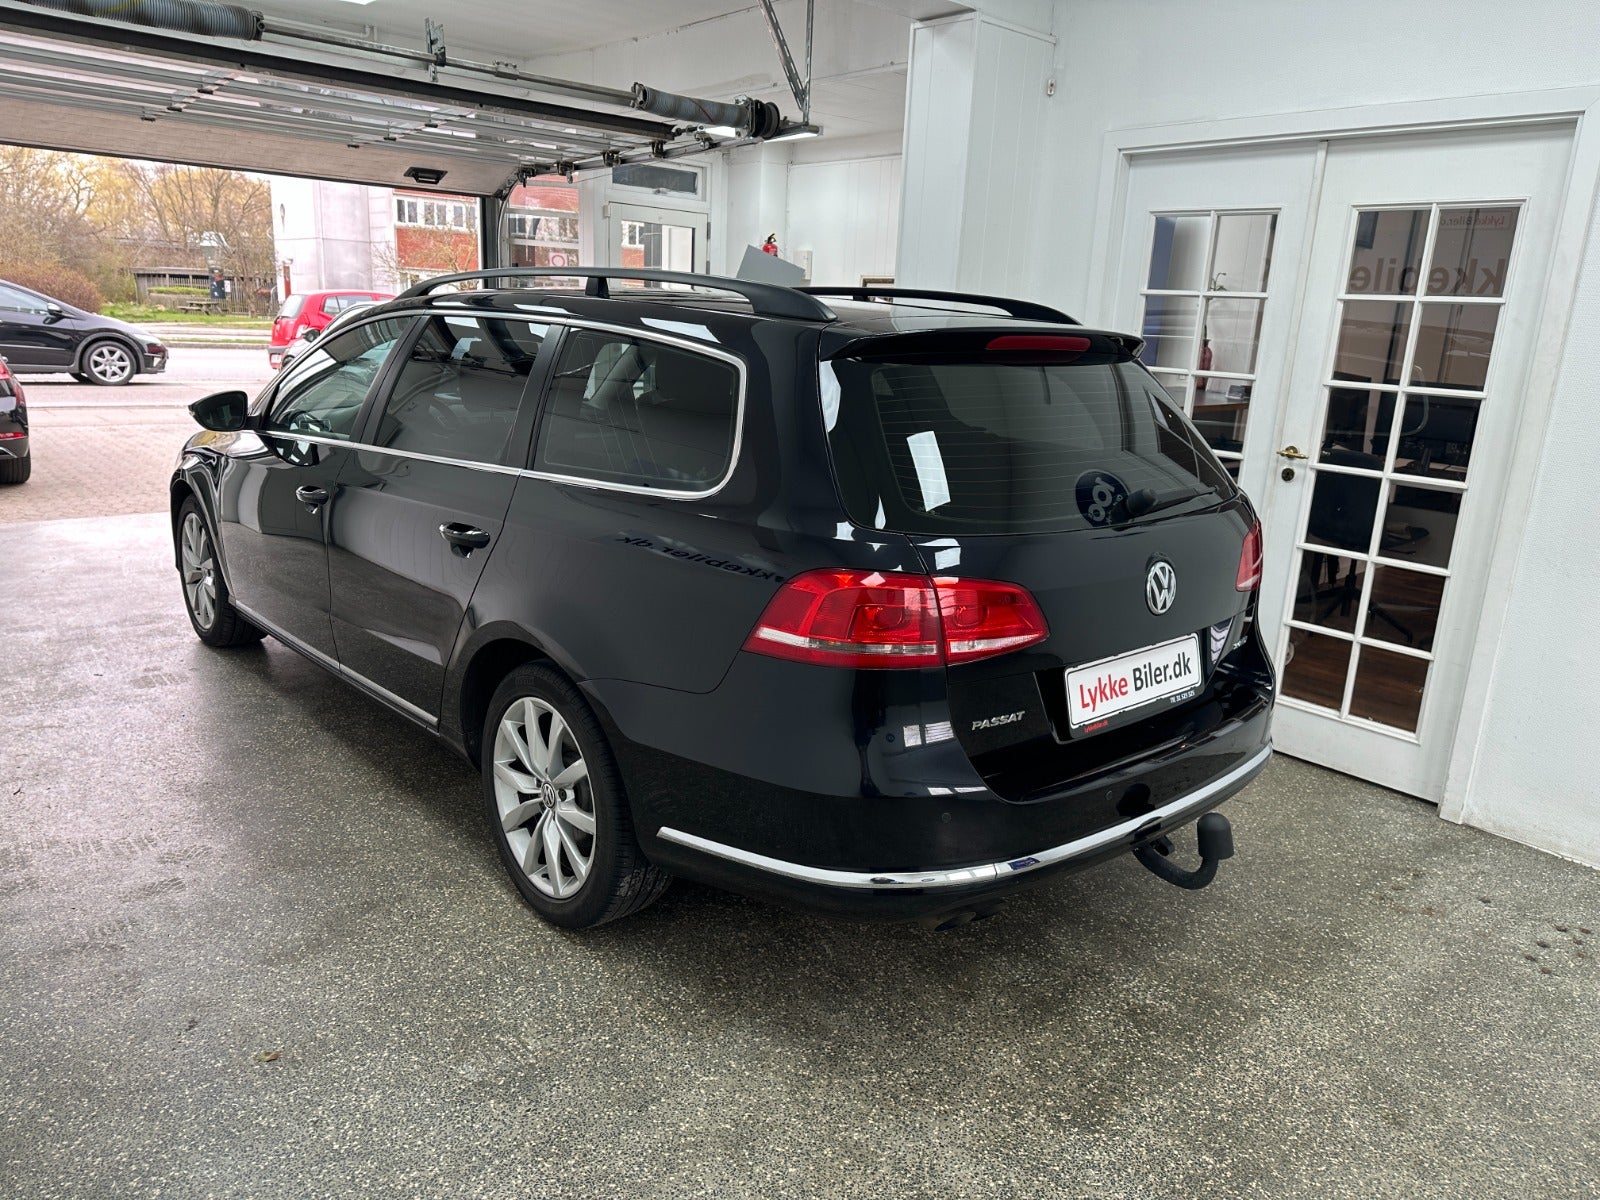 VW Passat 2014